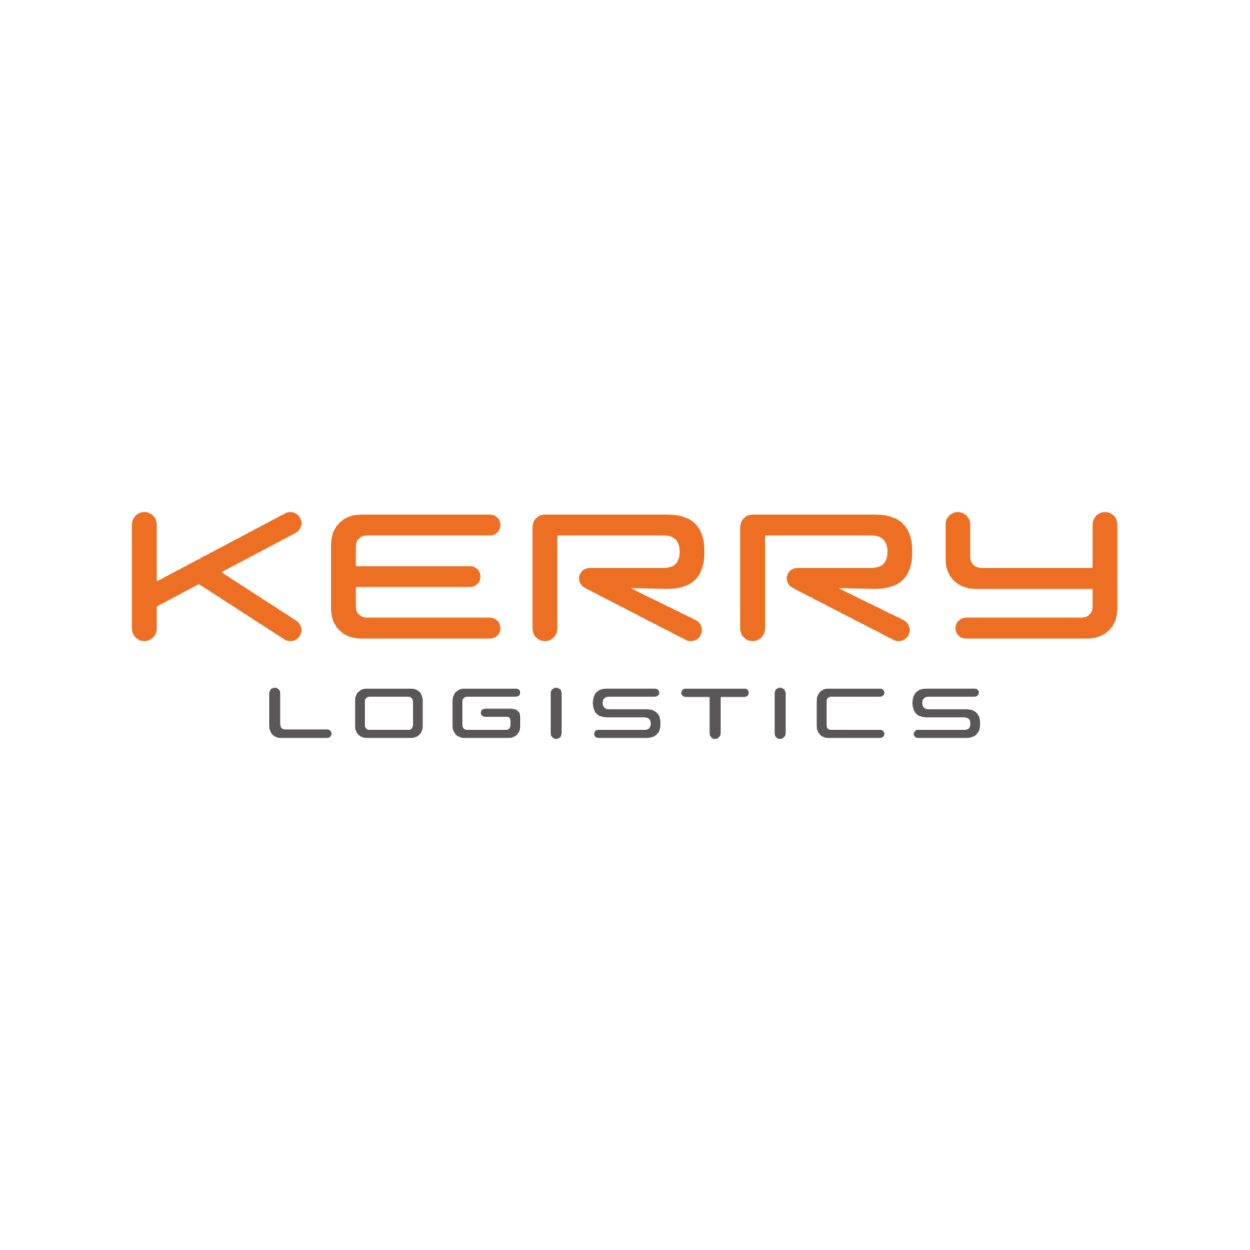 Kerry Logistics Network